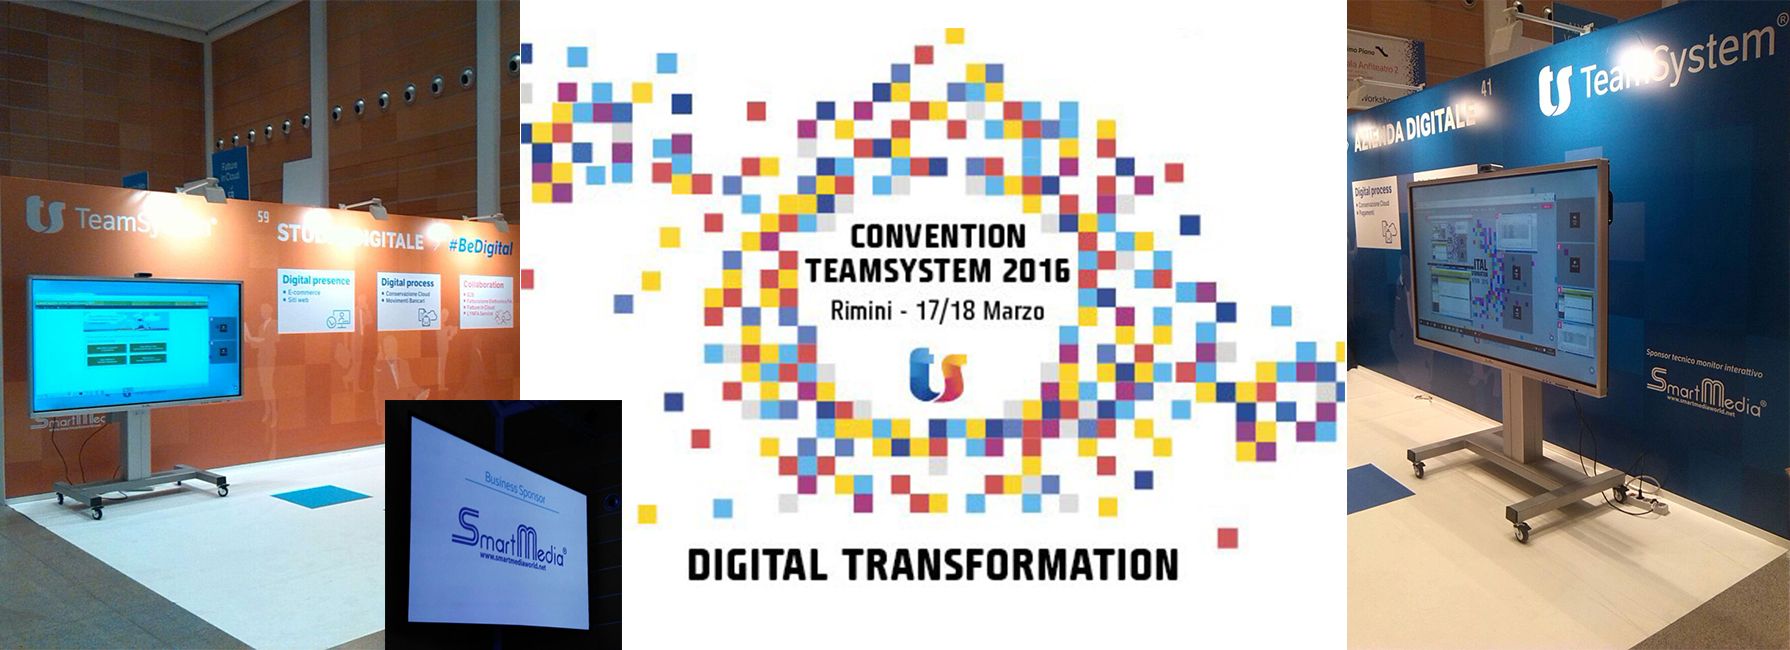 Convention TeamSystem Rimini - SmartMedia Sponsor Business